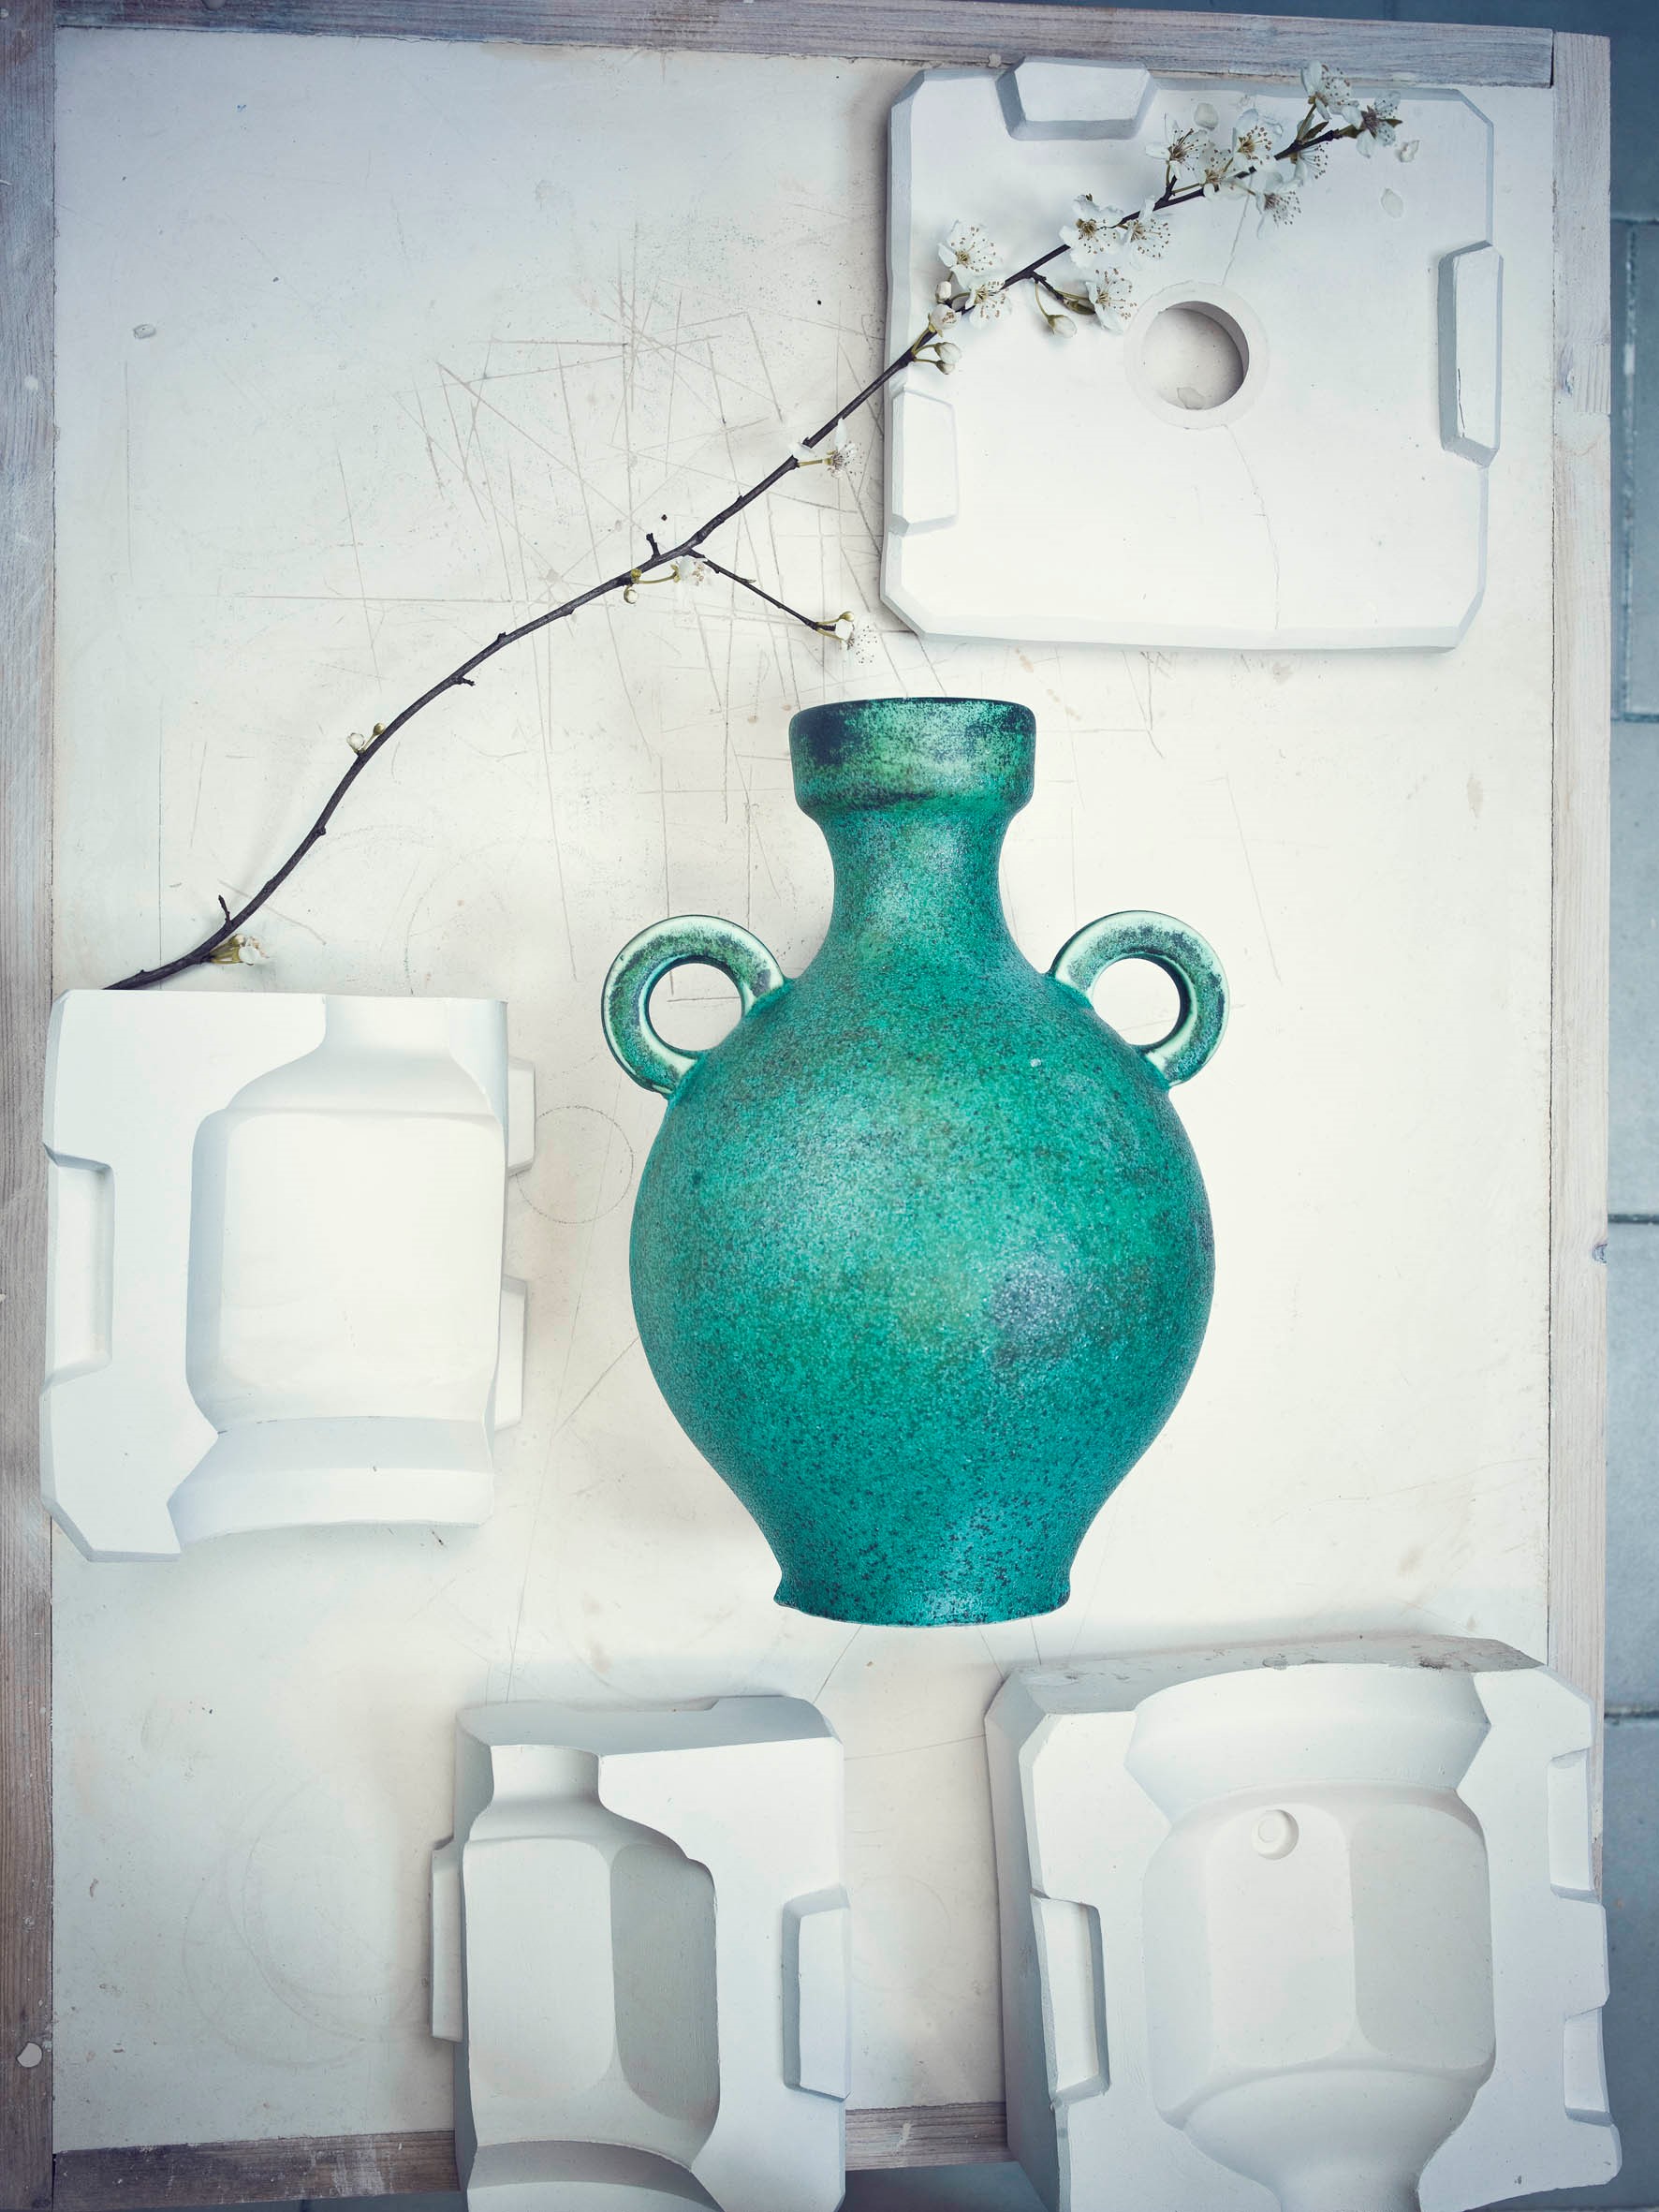 Milan Pekař – Kulatá váza (Round Vase)  (foto: Salim Issa)